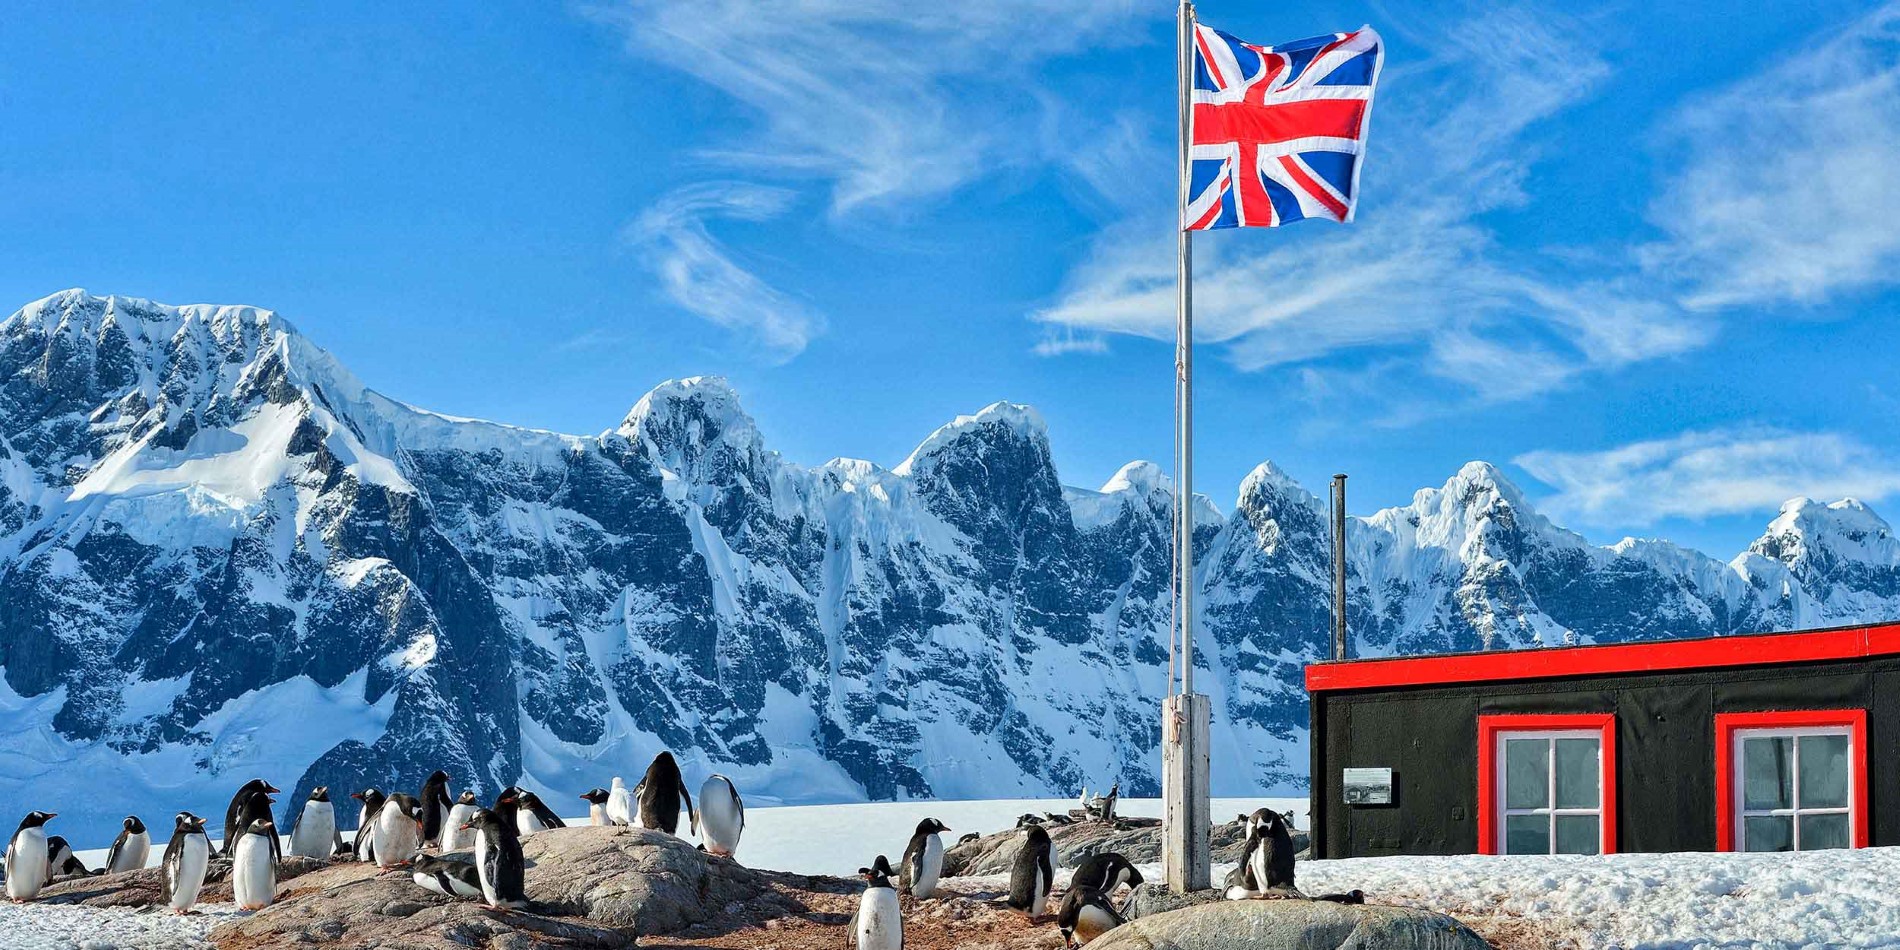 Get up close to wildlife in Antarctica